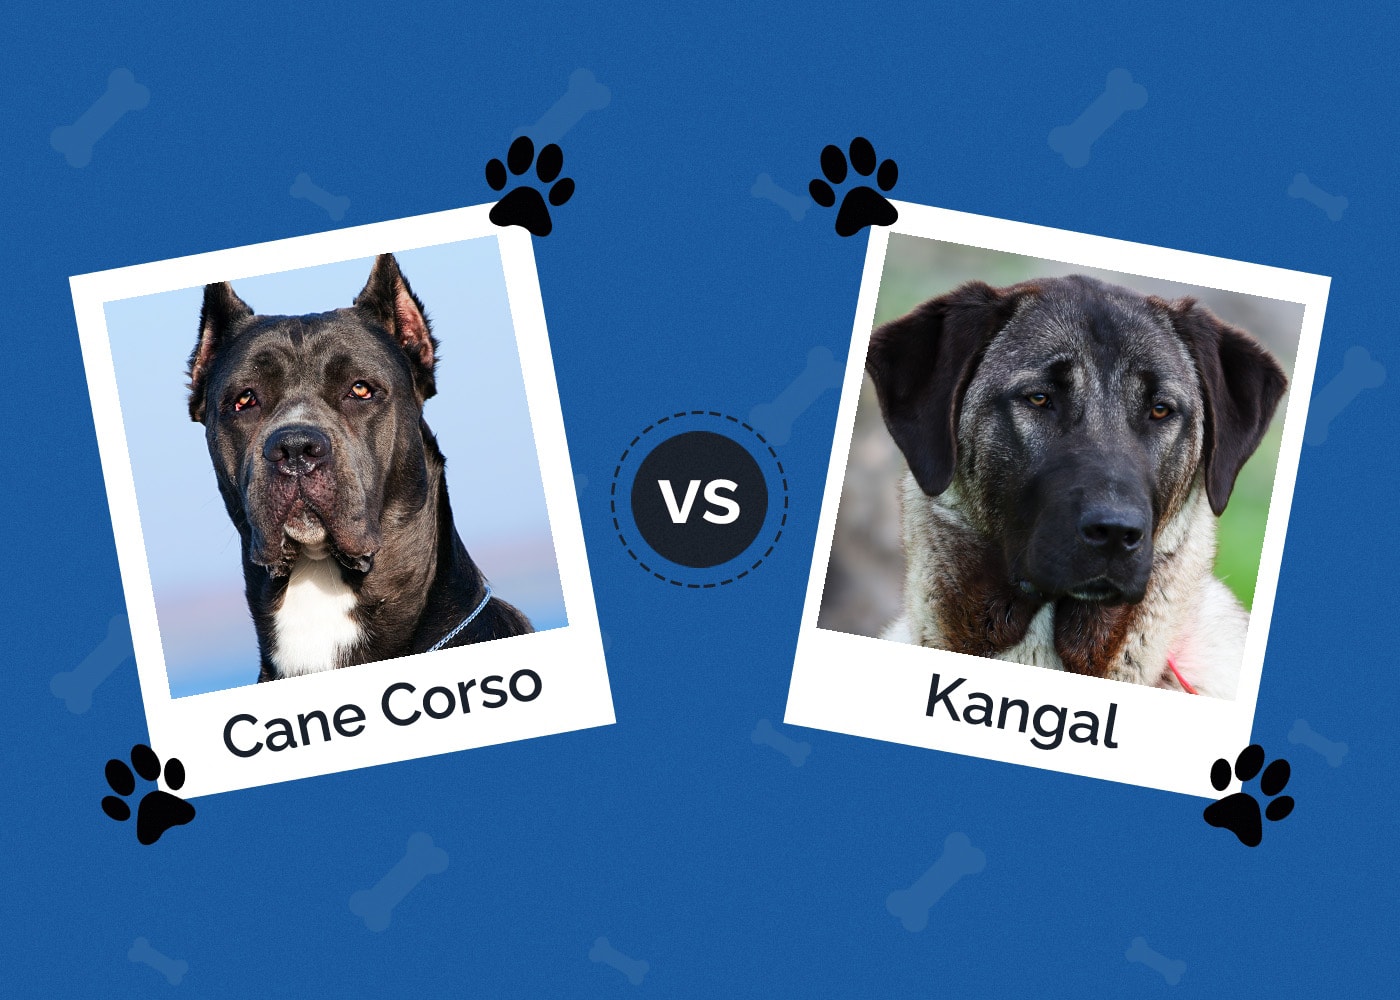 Cane Corso vs Kangal